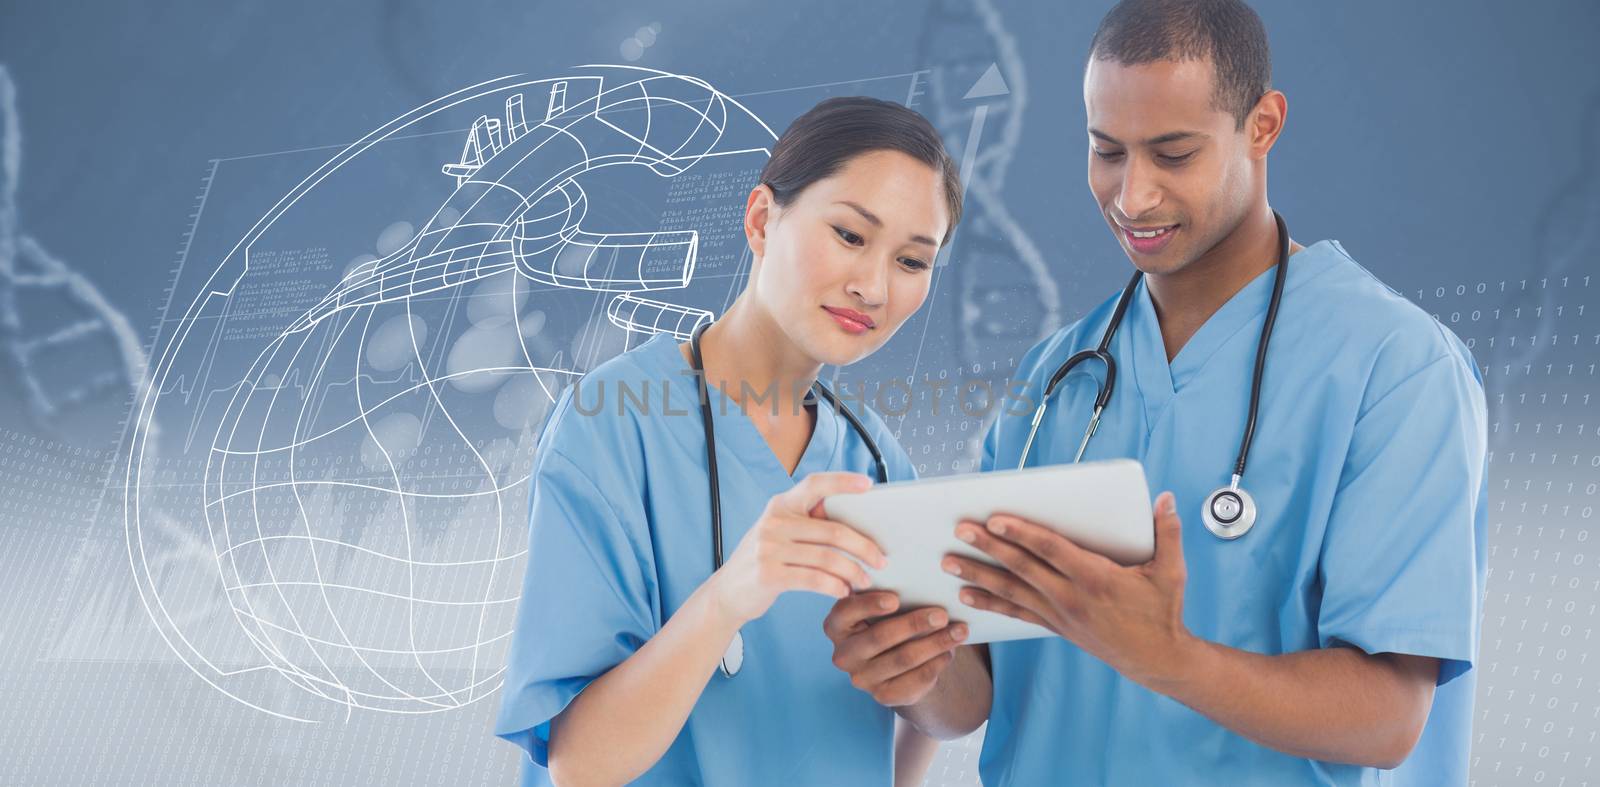 Composite image of surgeons looking at digital tablet in hospital by Wavebreakmedia